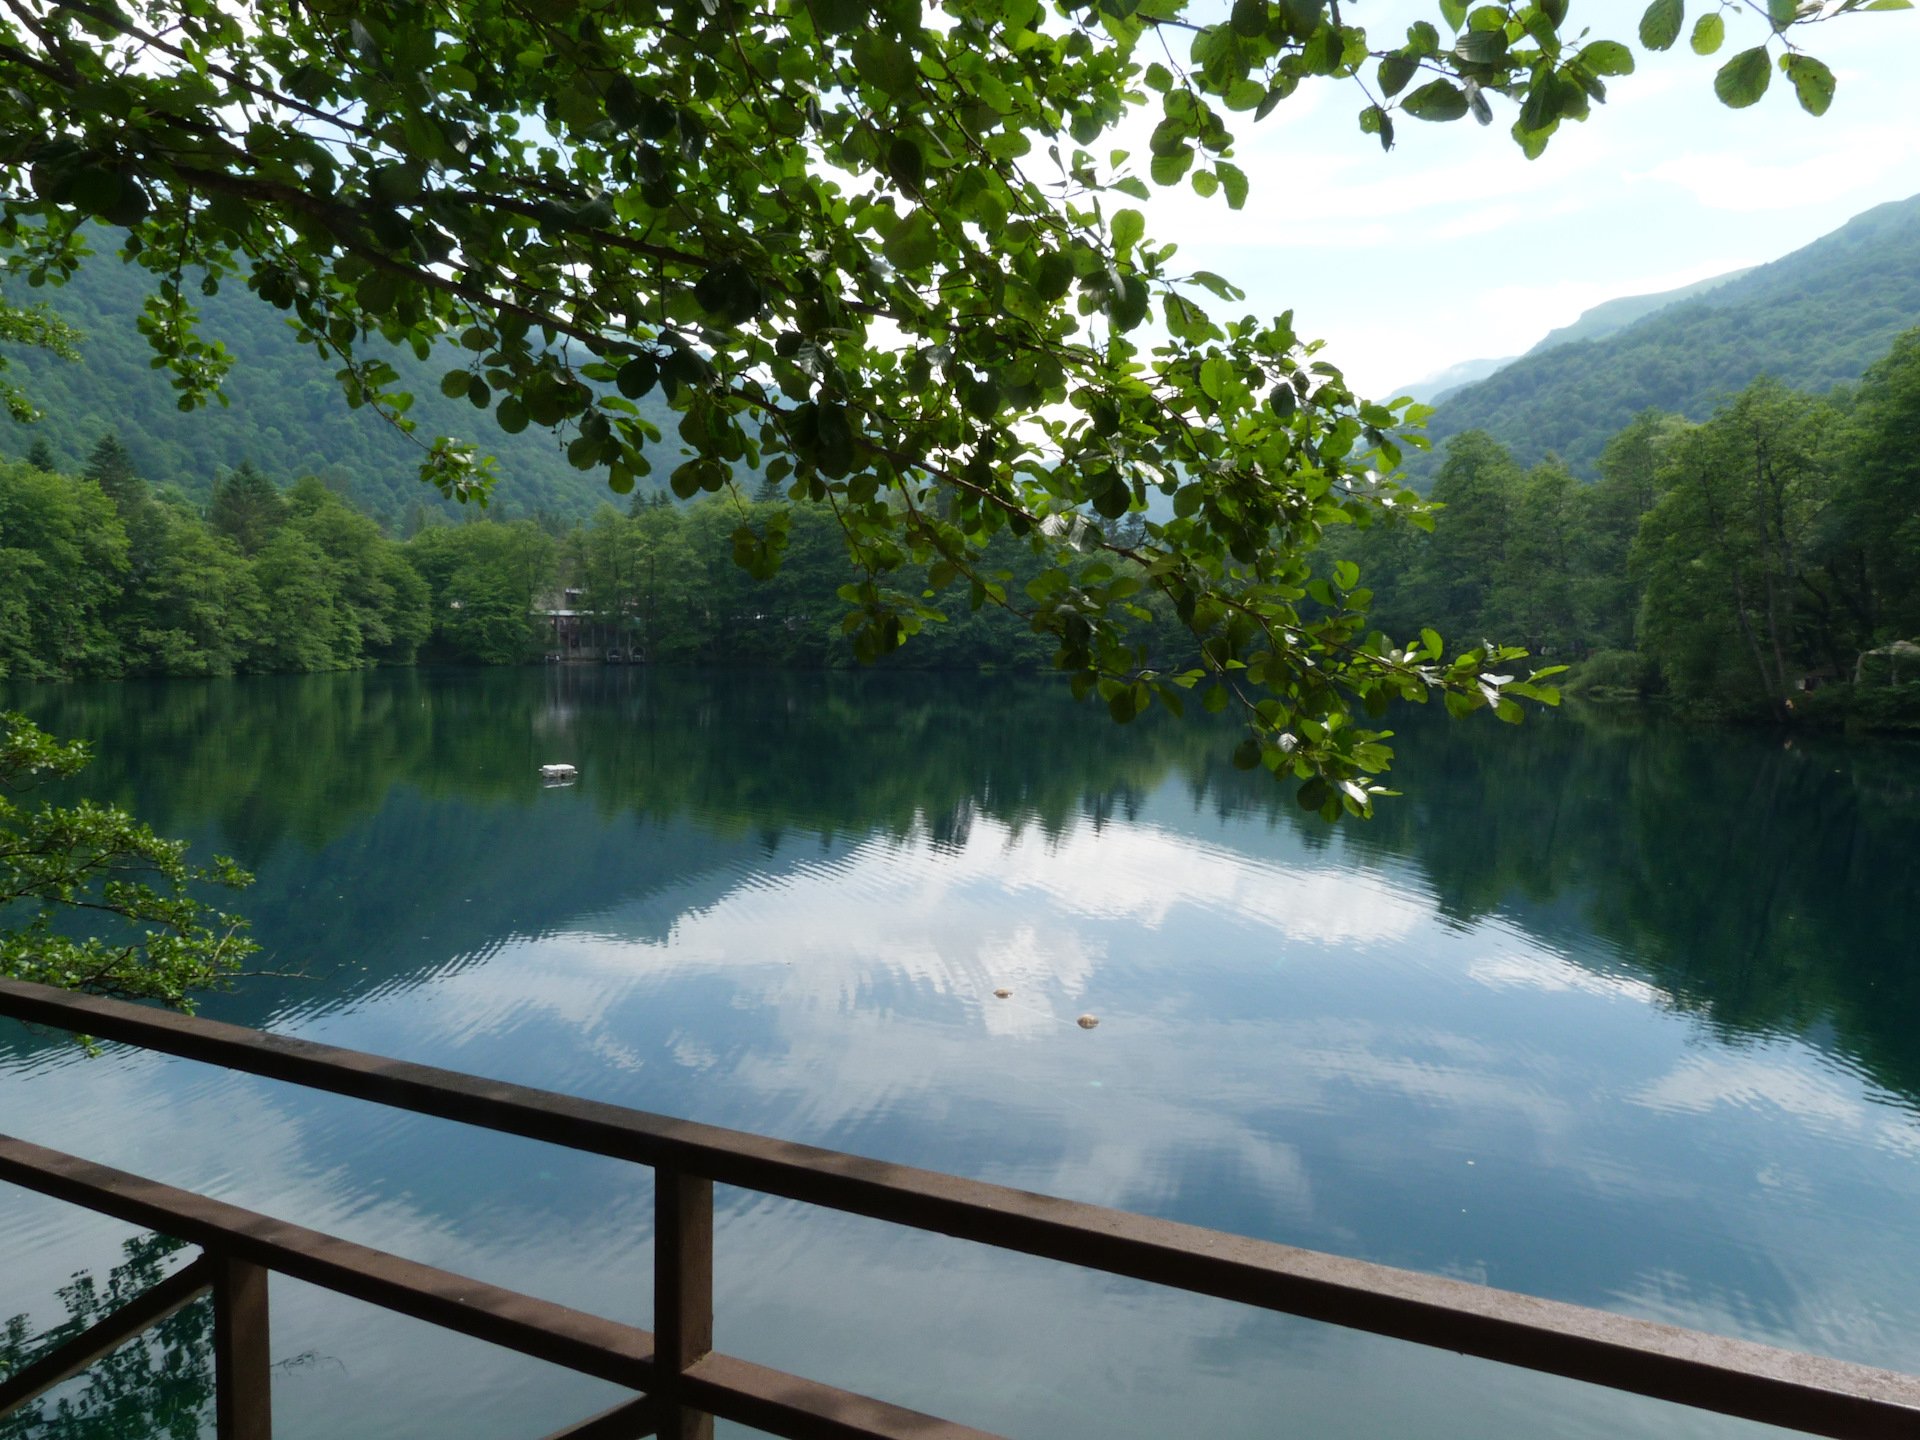 Гостиница голубые озера. Голубые озёра Кабардино-Балкария. Озеро Церик-кёль Кабардино-Балкария. Голубое озеро Церик Кель Кабардино-Балкария. Верхние голубые озера Кабардино-Балкарии гостиница.